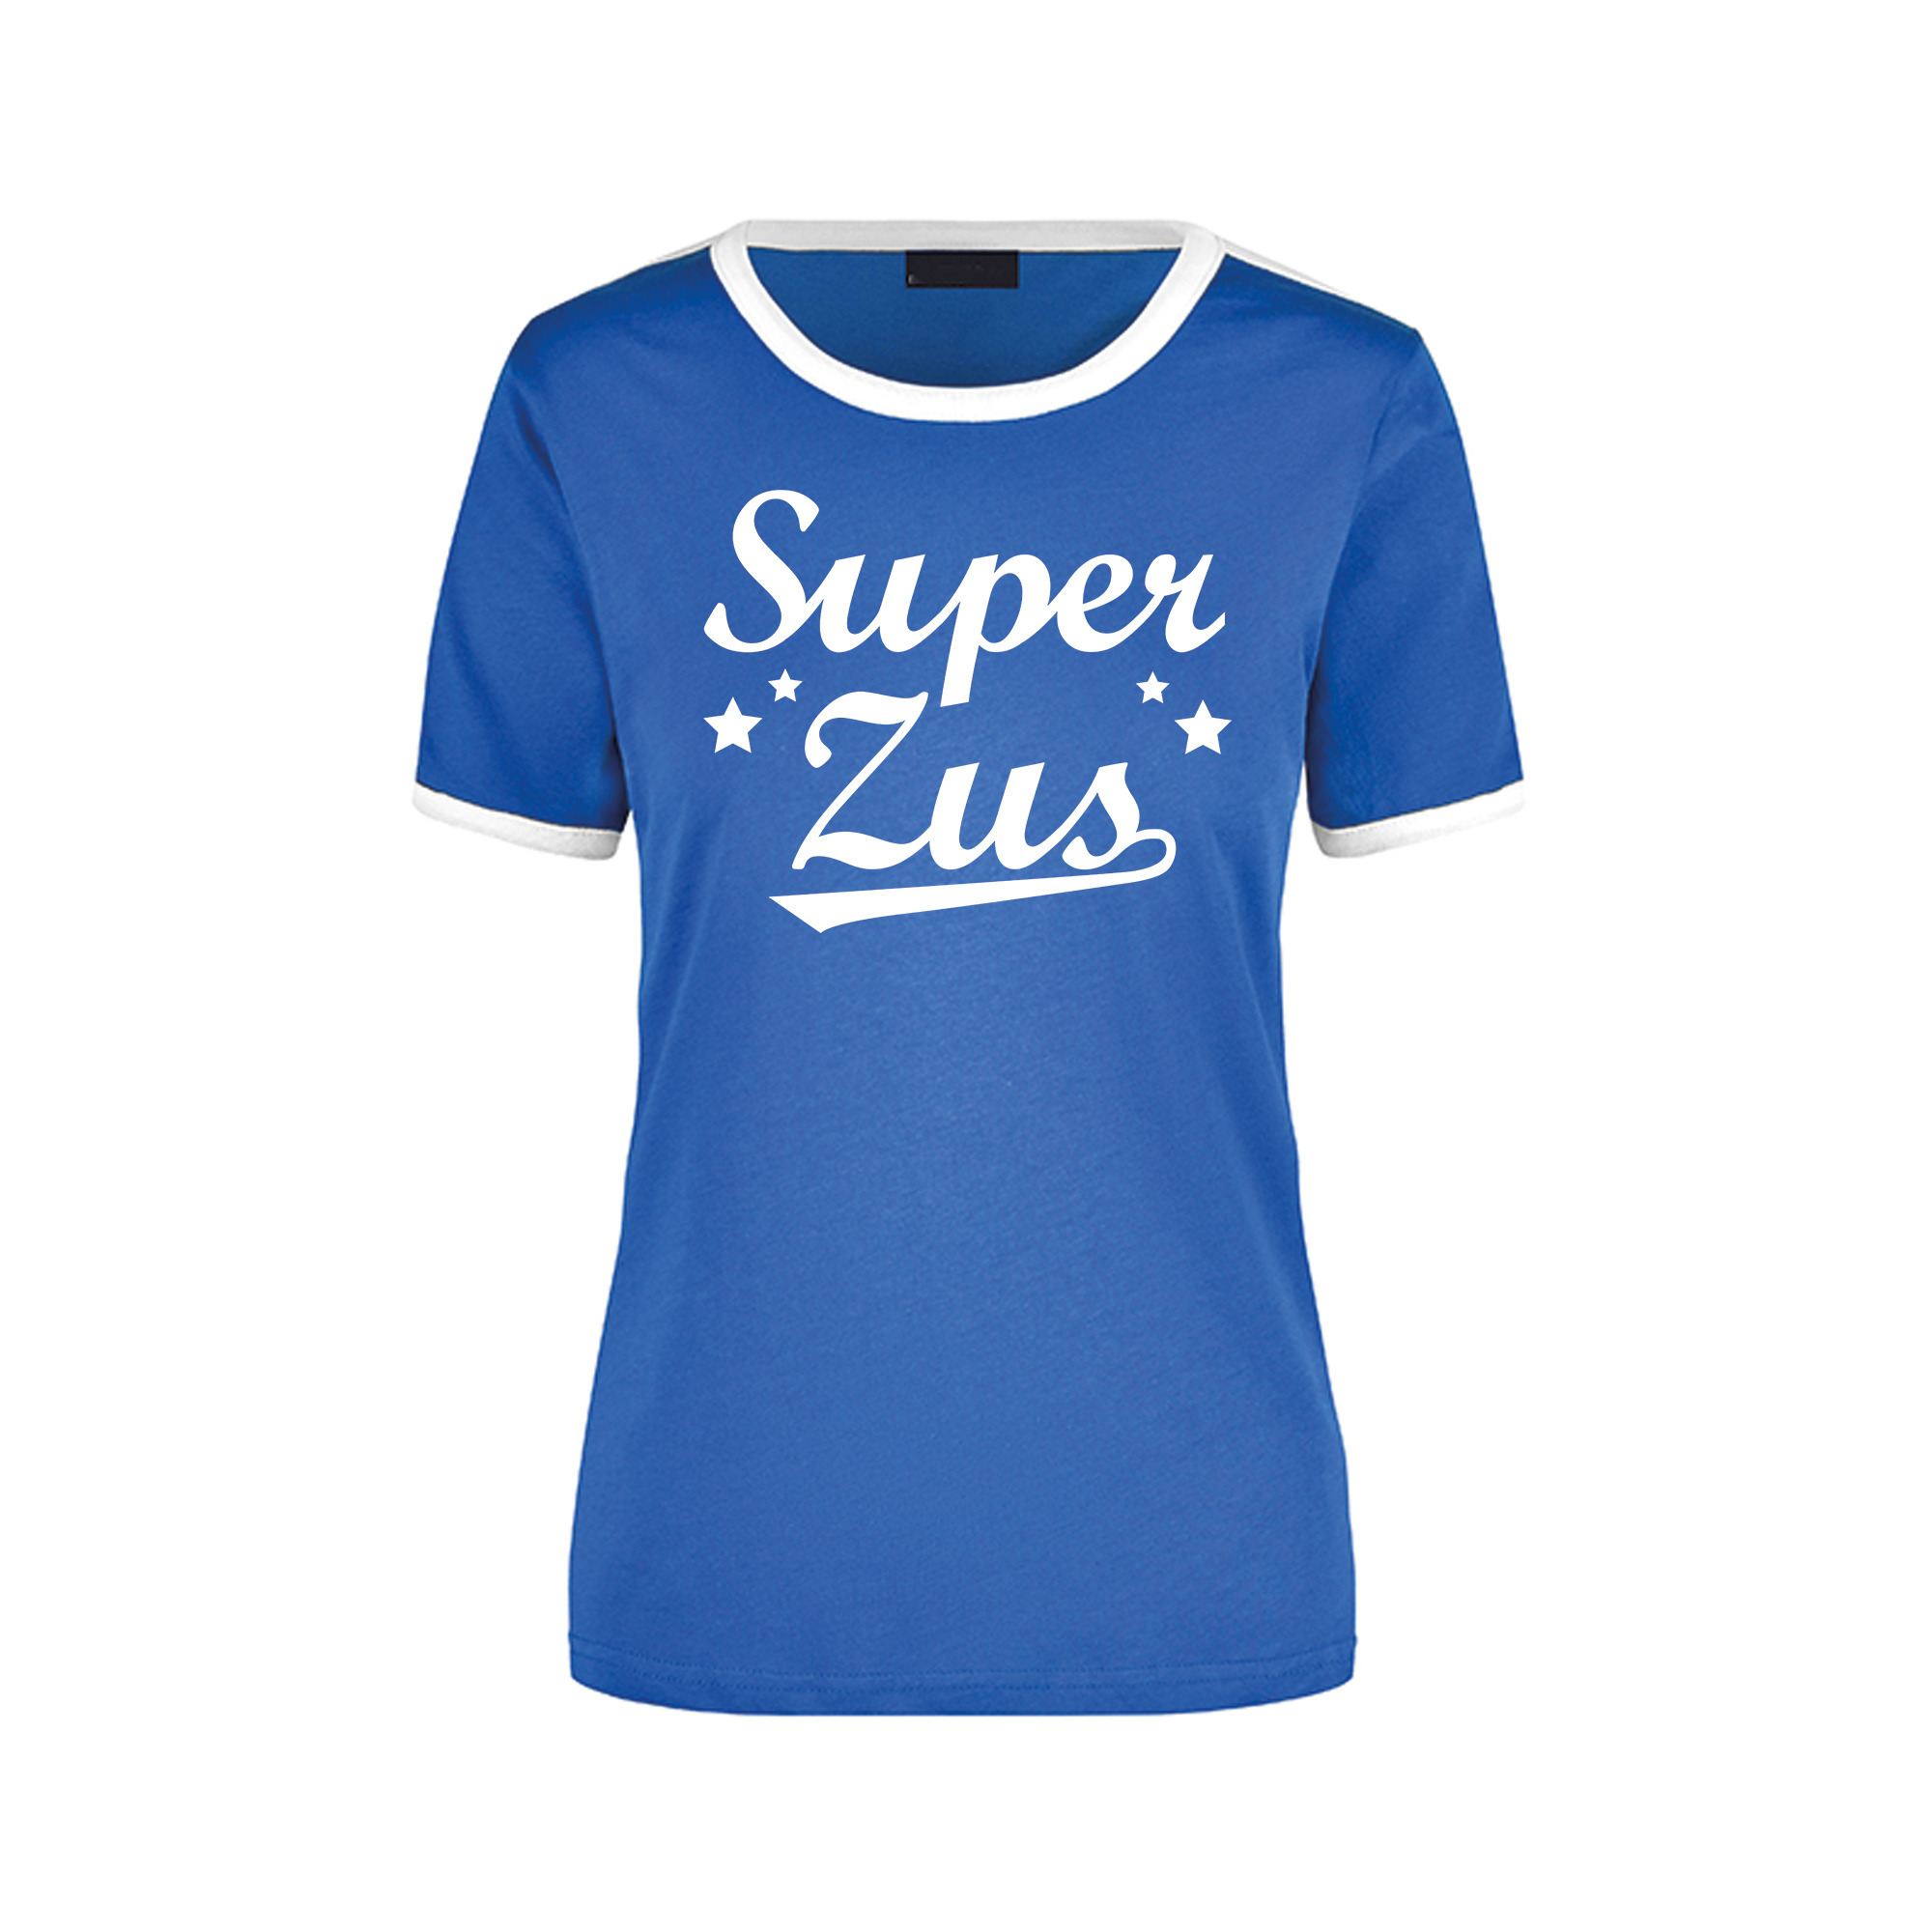 Super zus blauw/wit ringer t-shirt voor dames